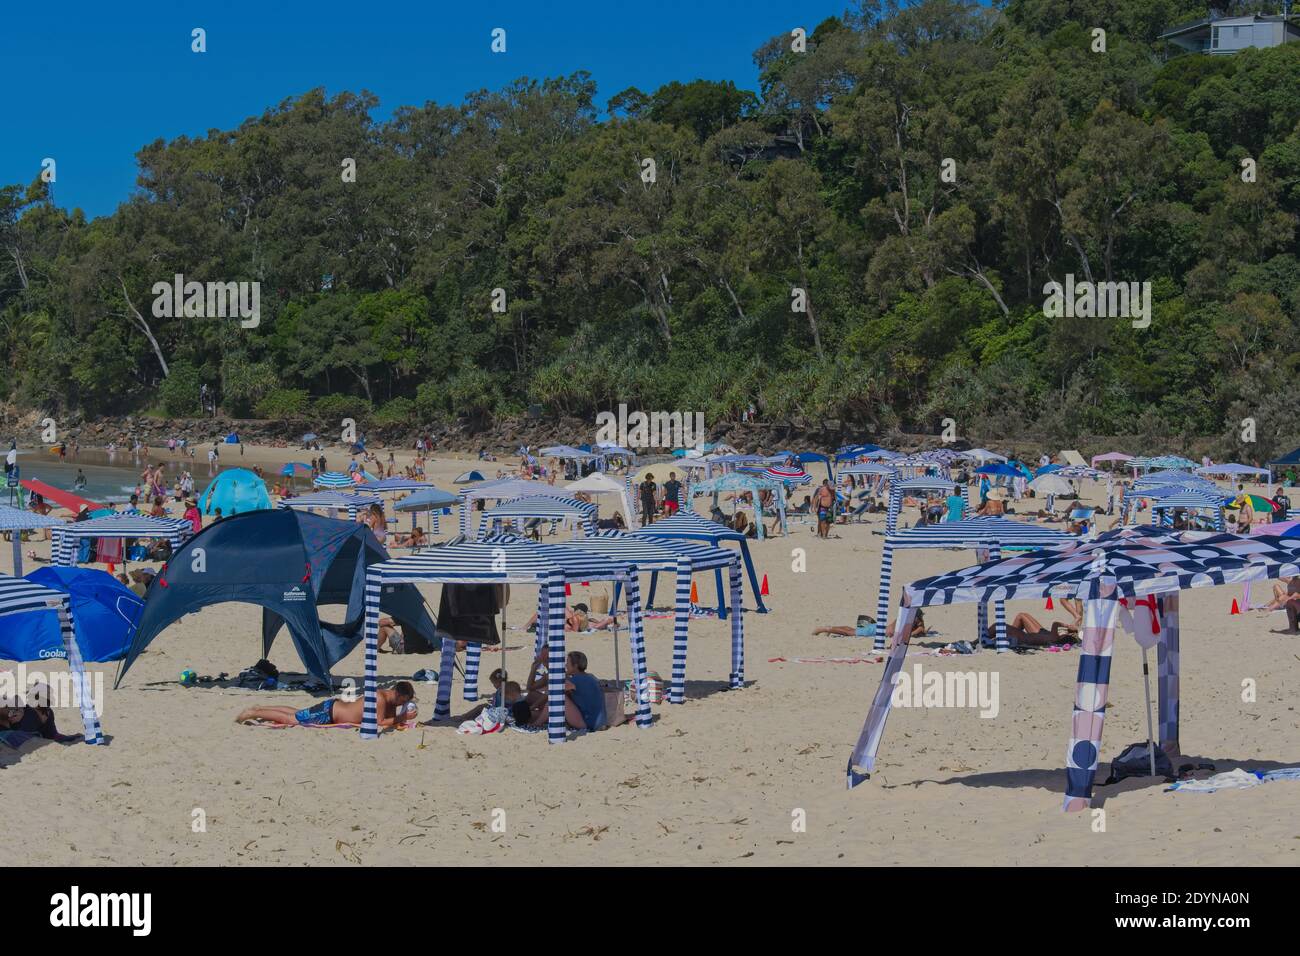 Noosa, Queensland, Australia - December 27, 2020: People enjoying the beach in Noosa during the Christmas school holidays. Stock Photo